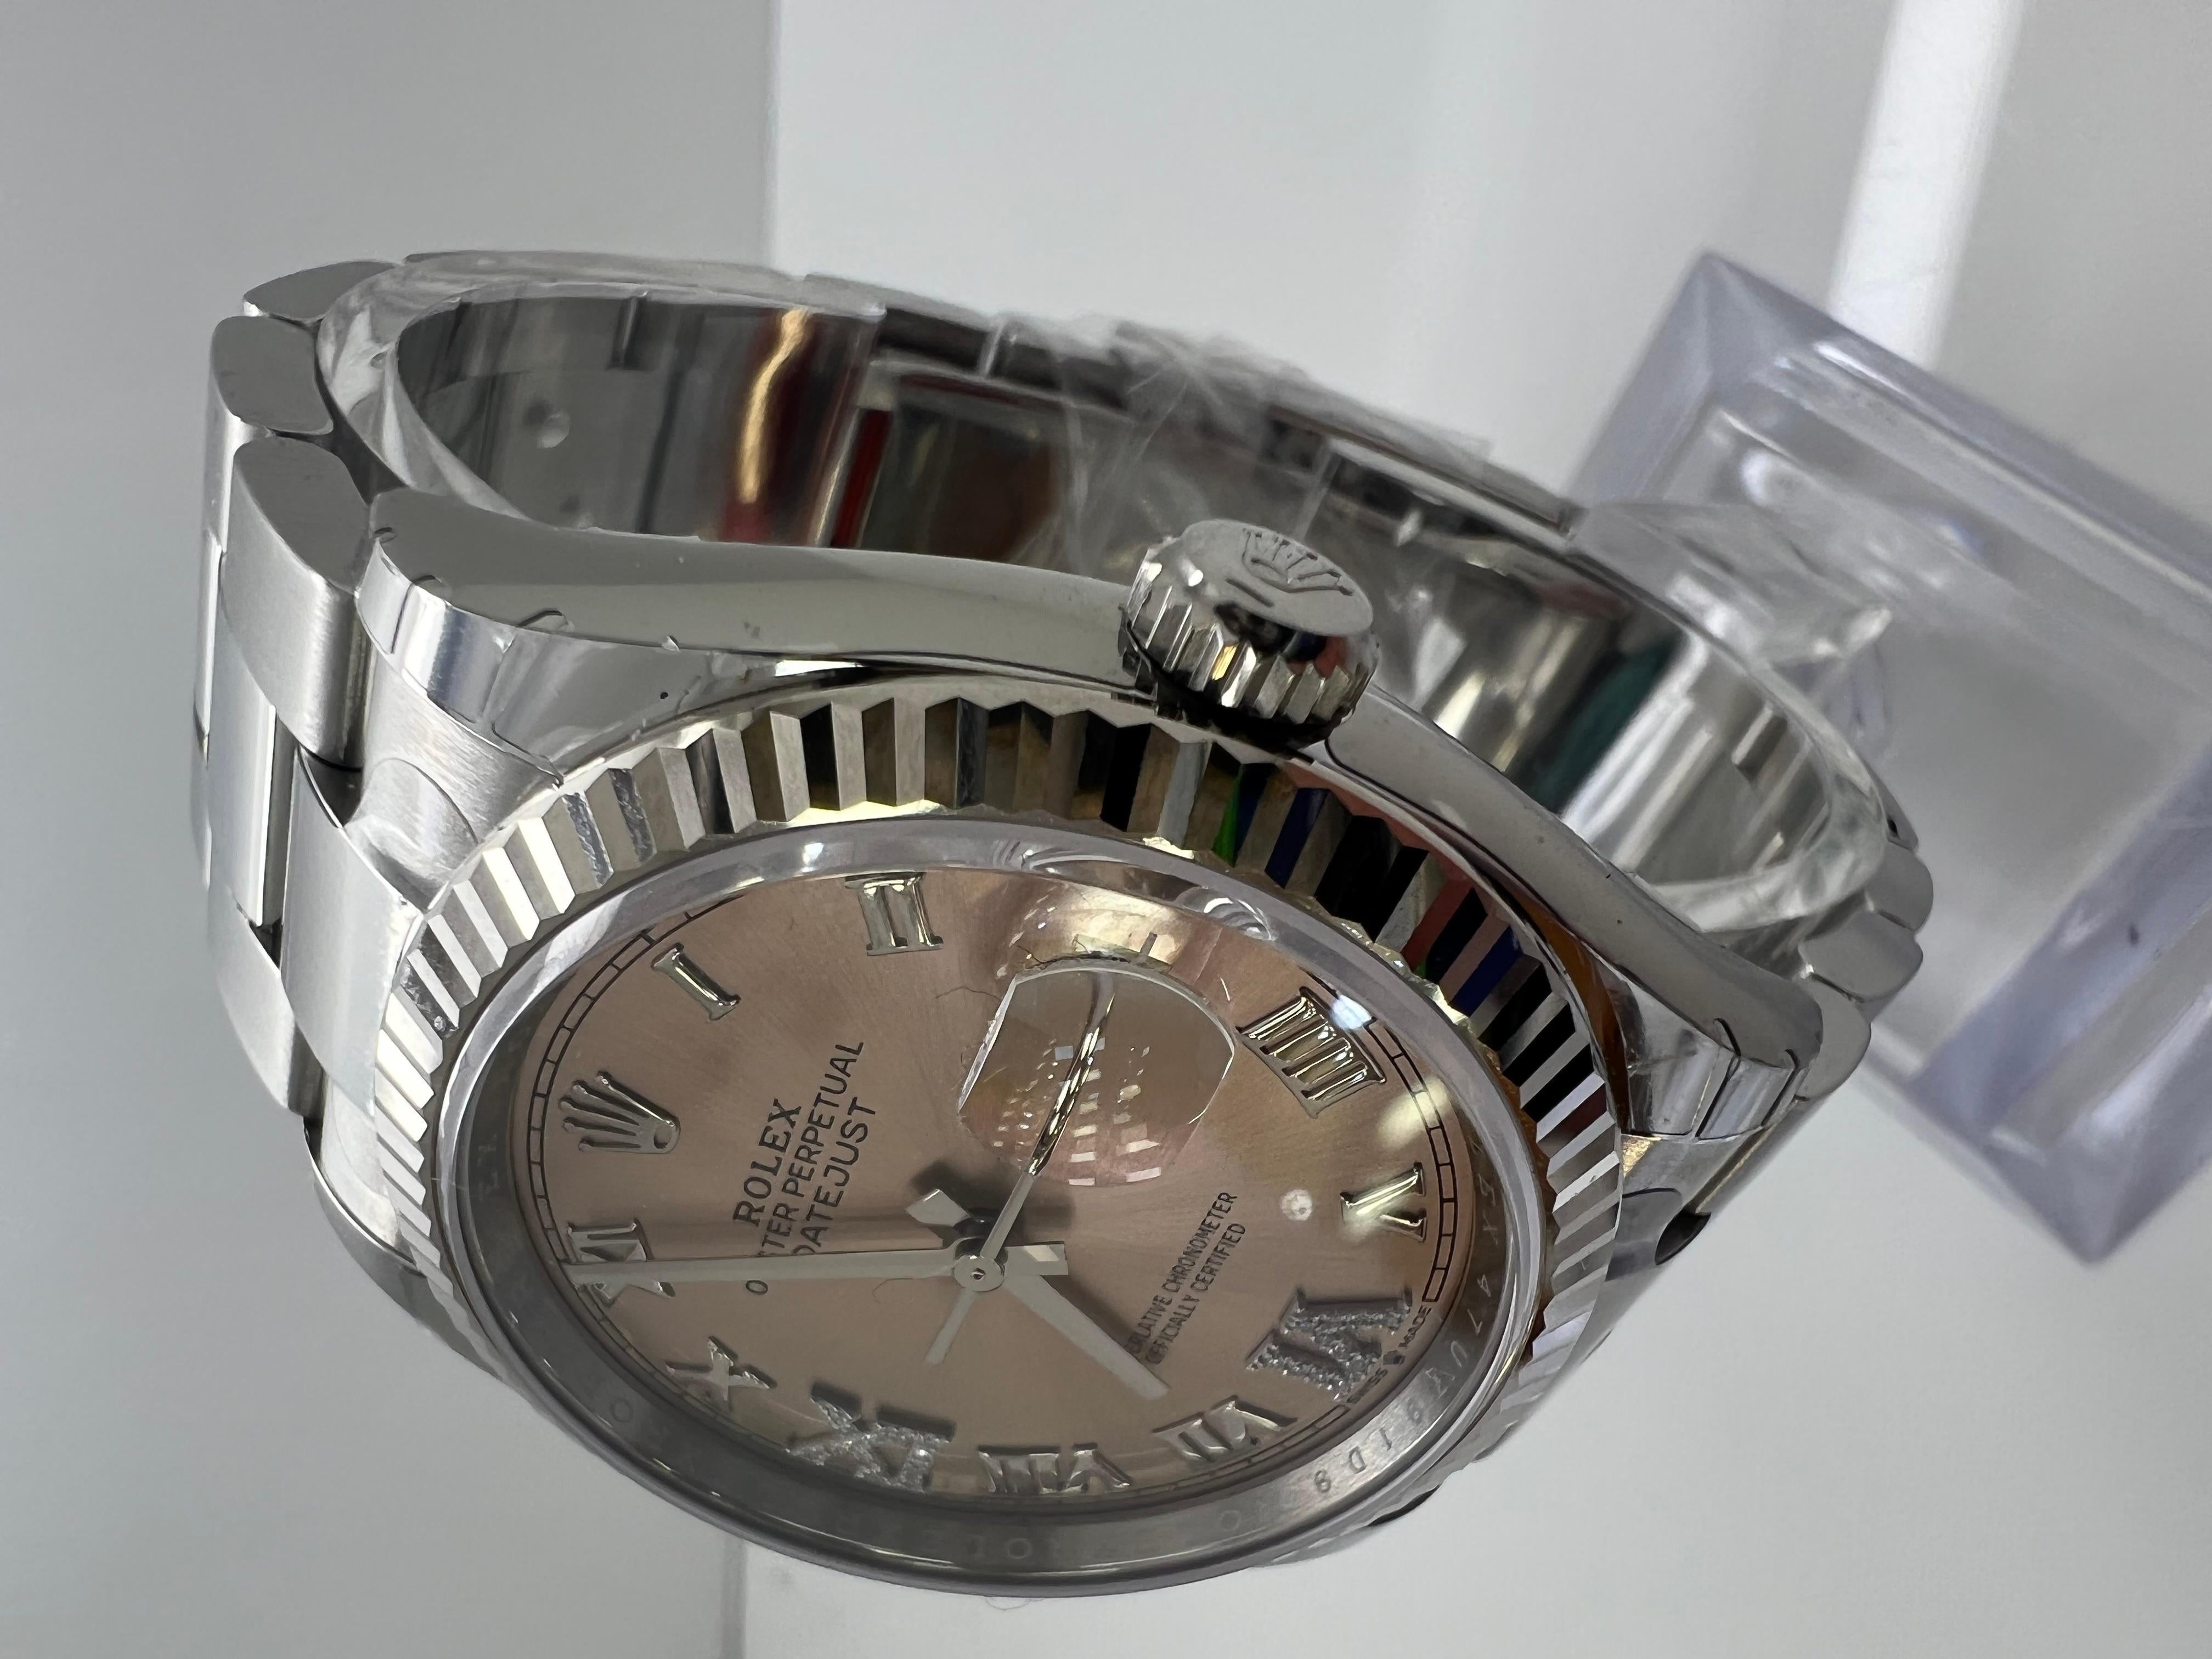 Rolex Datejust 36mm Pink Diamond Roman Watch New

New 2021 unworn

All Original Rolex parts

Factory Diamond Dial

Original Box and Papers

4 year warranty

Shop with confidence

Evita Diamonds & Timepieces